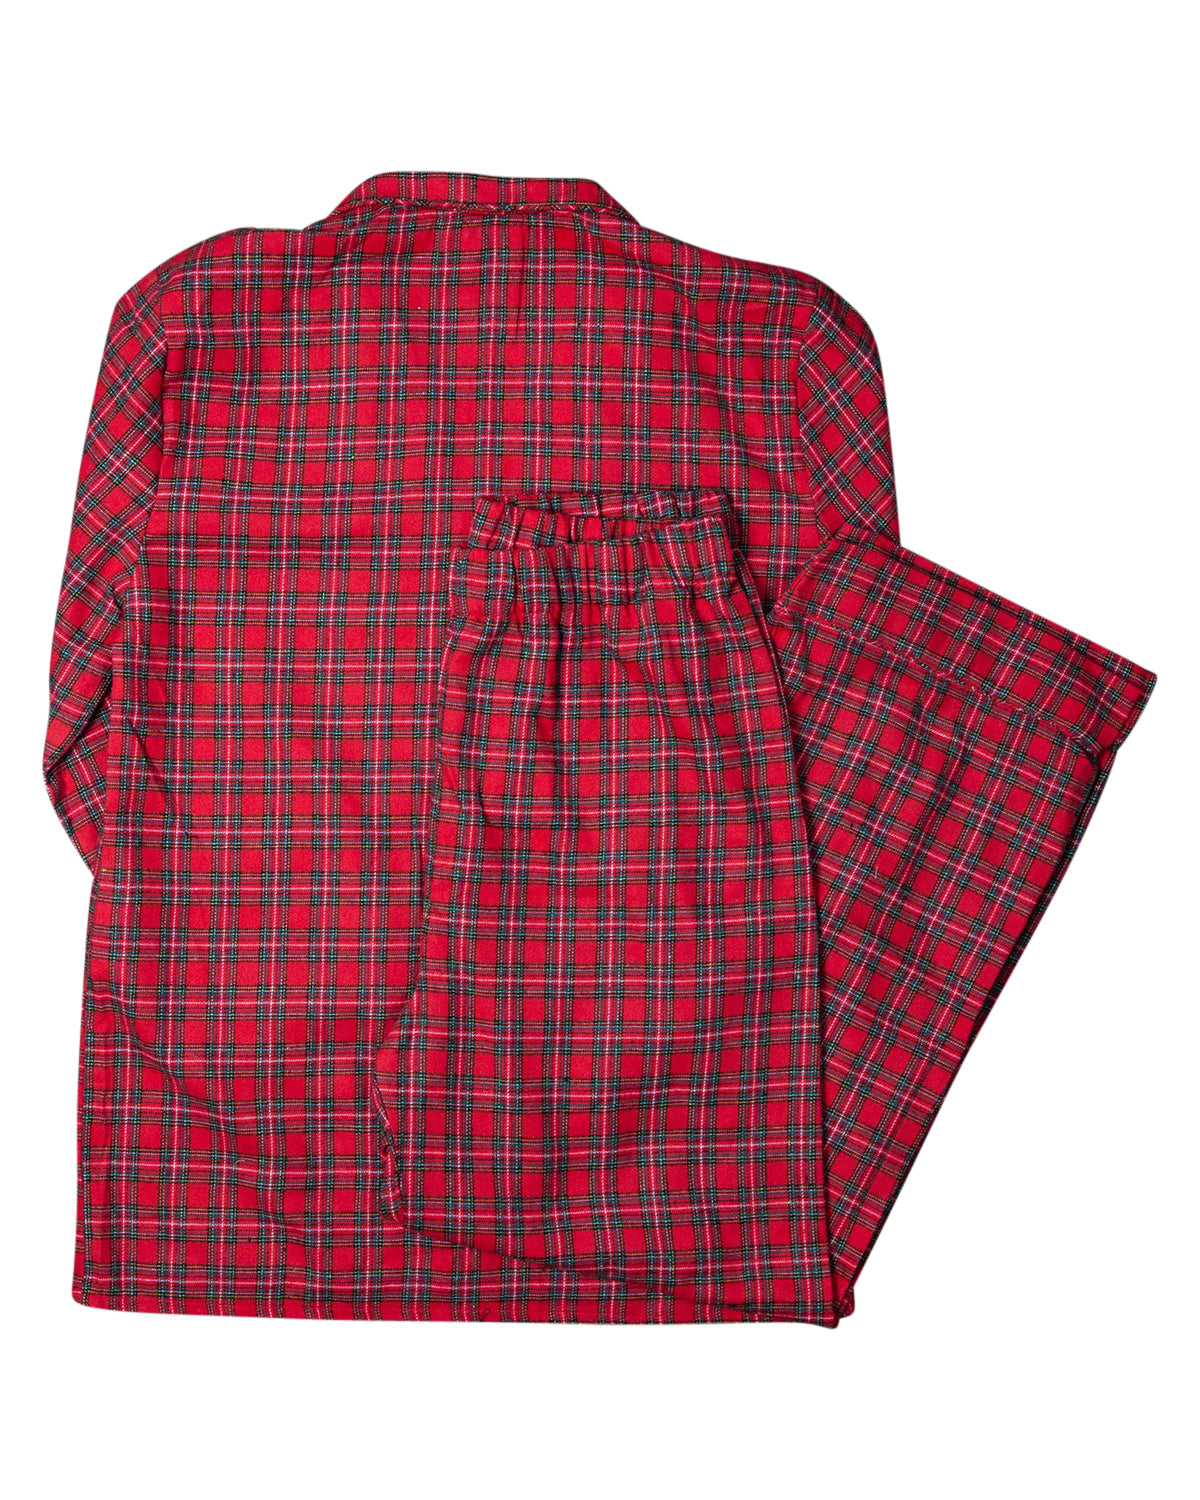 Red Tartan Plaid Loungewear for Adults- FINAL SALE